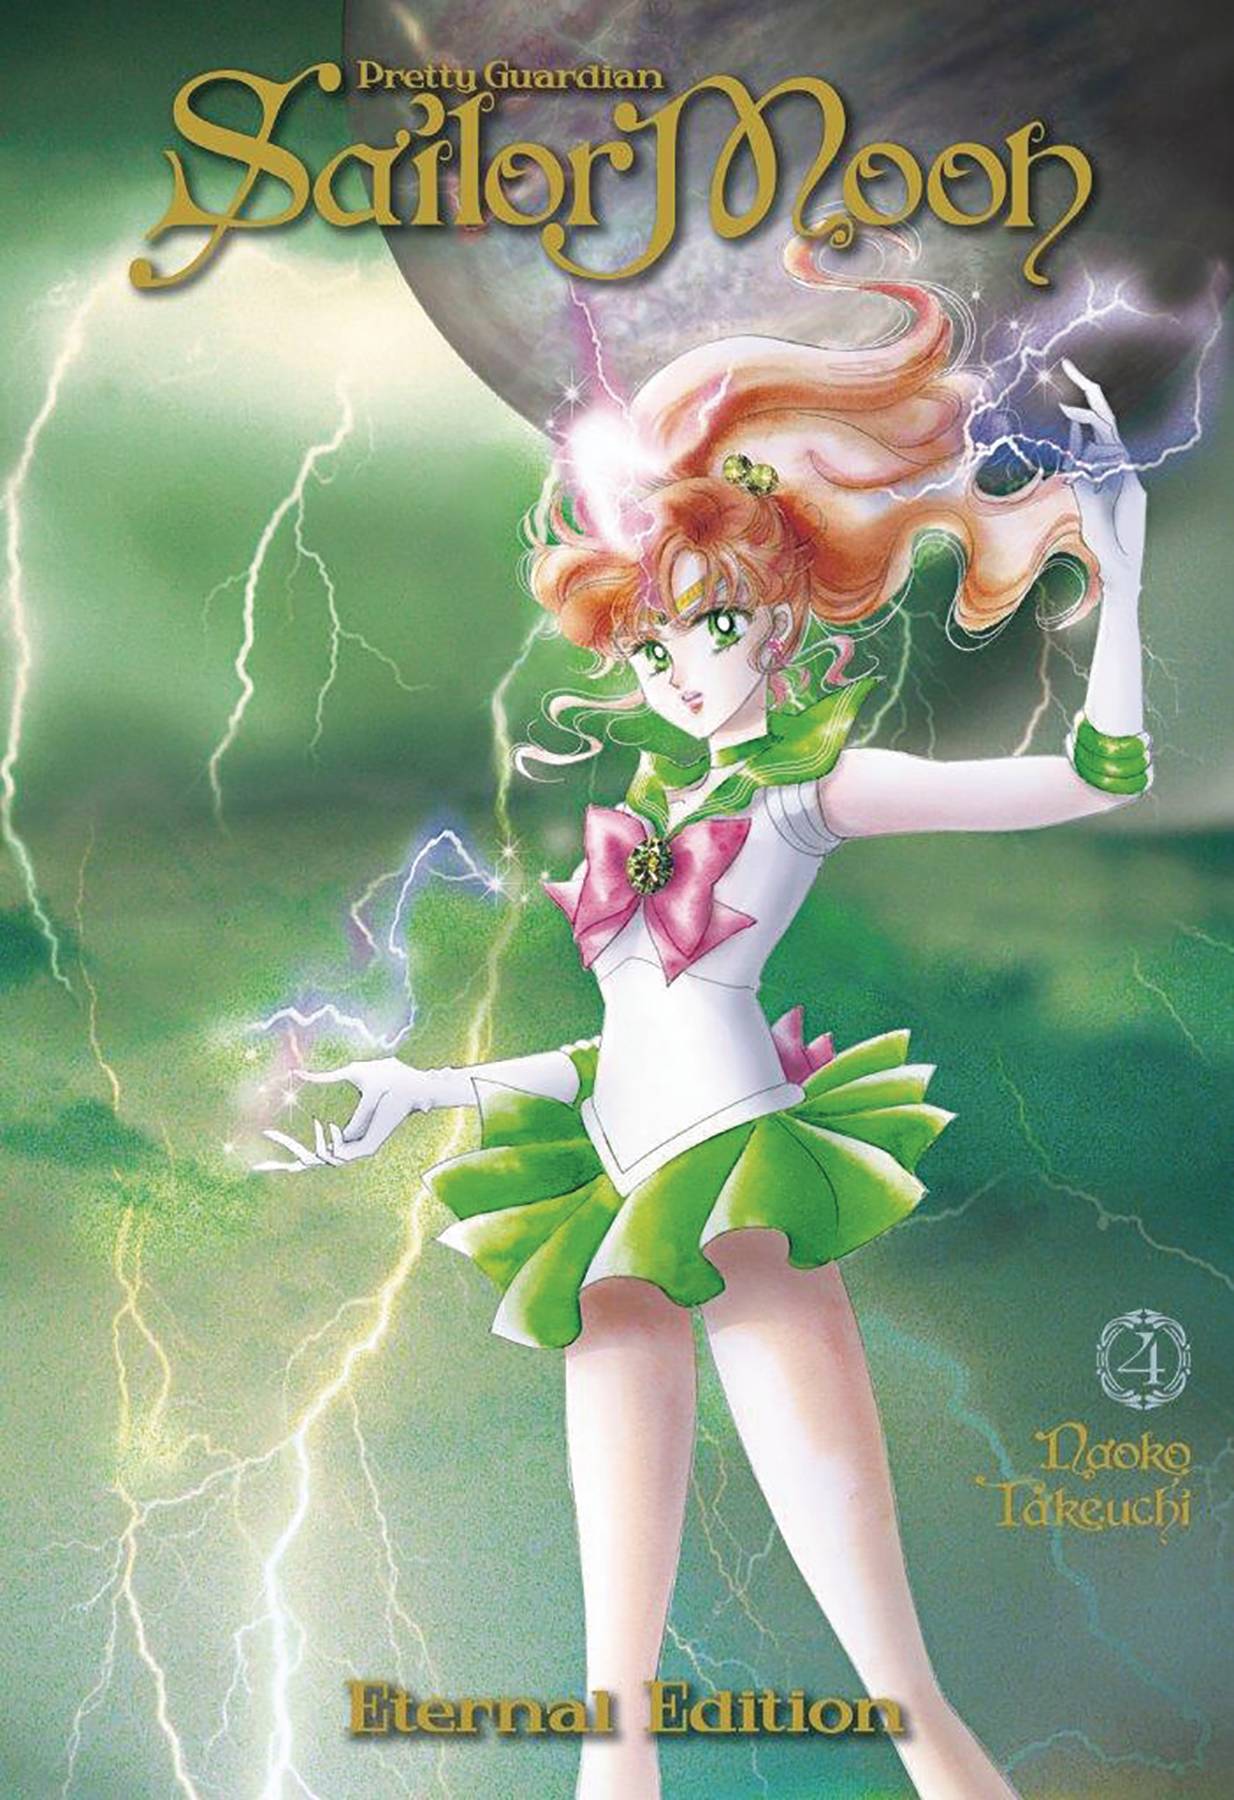 Pretty Guardian Sailor Moon Eternal Edition